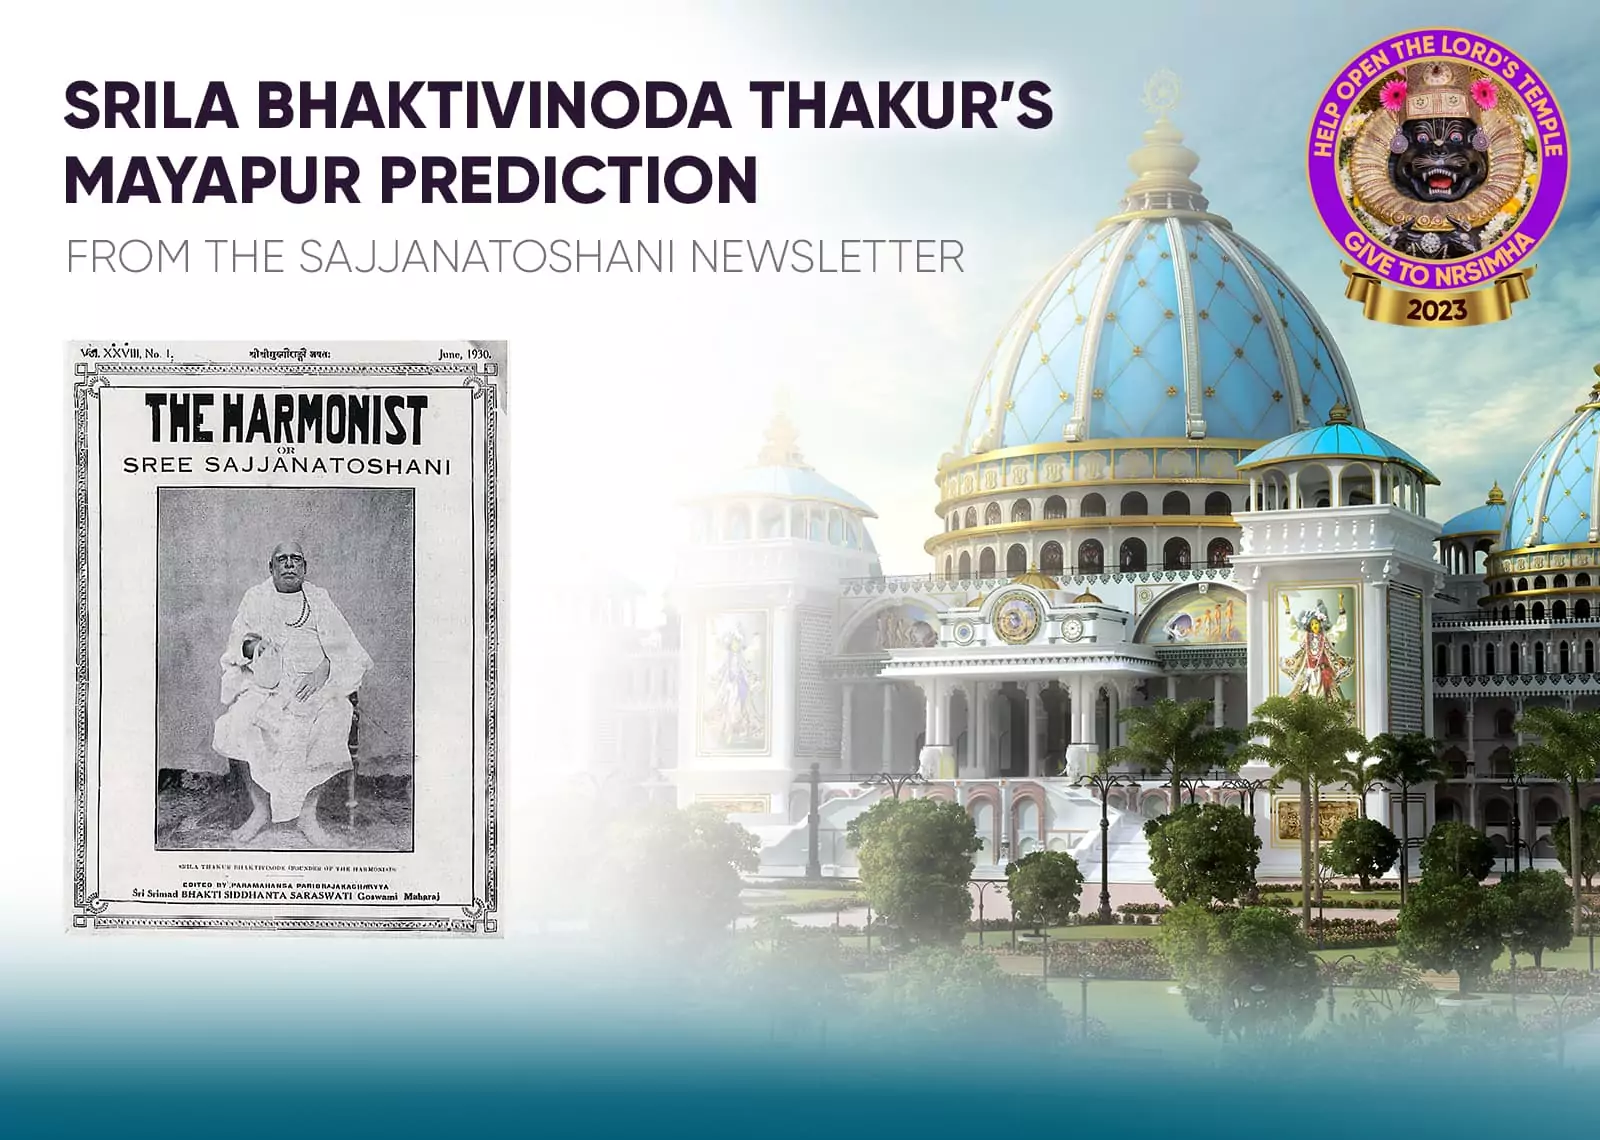 Previsão Mayapur de Srila Bhaktivinoda Thakura